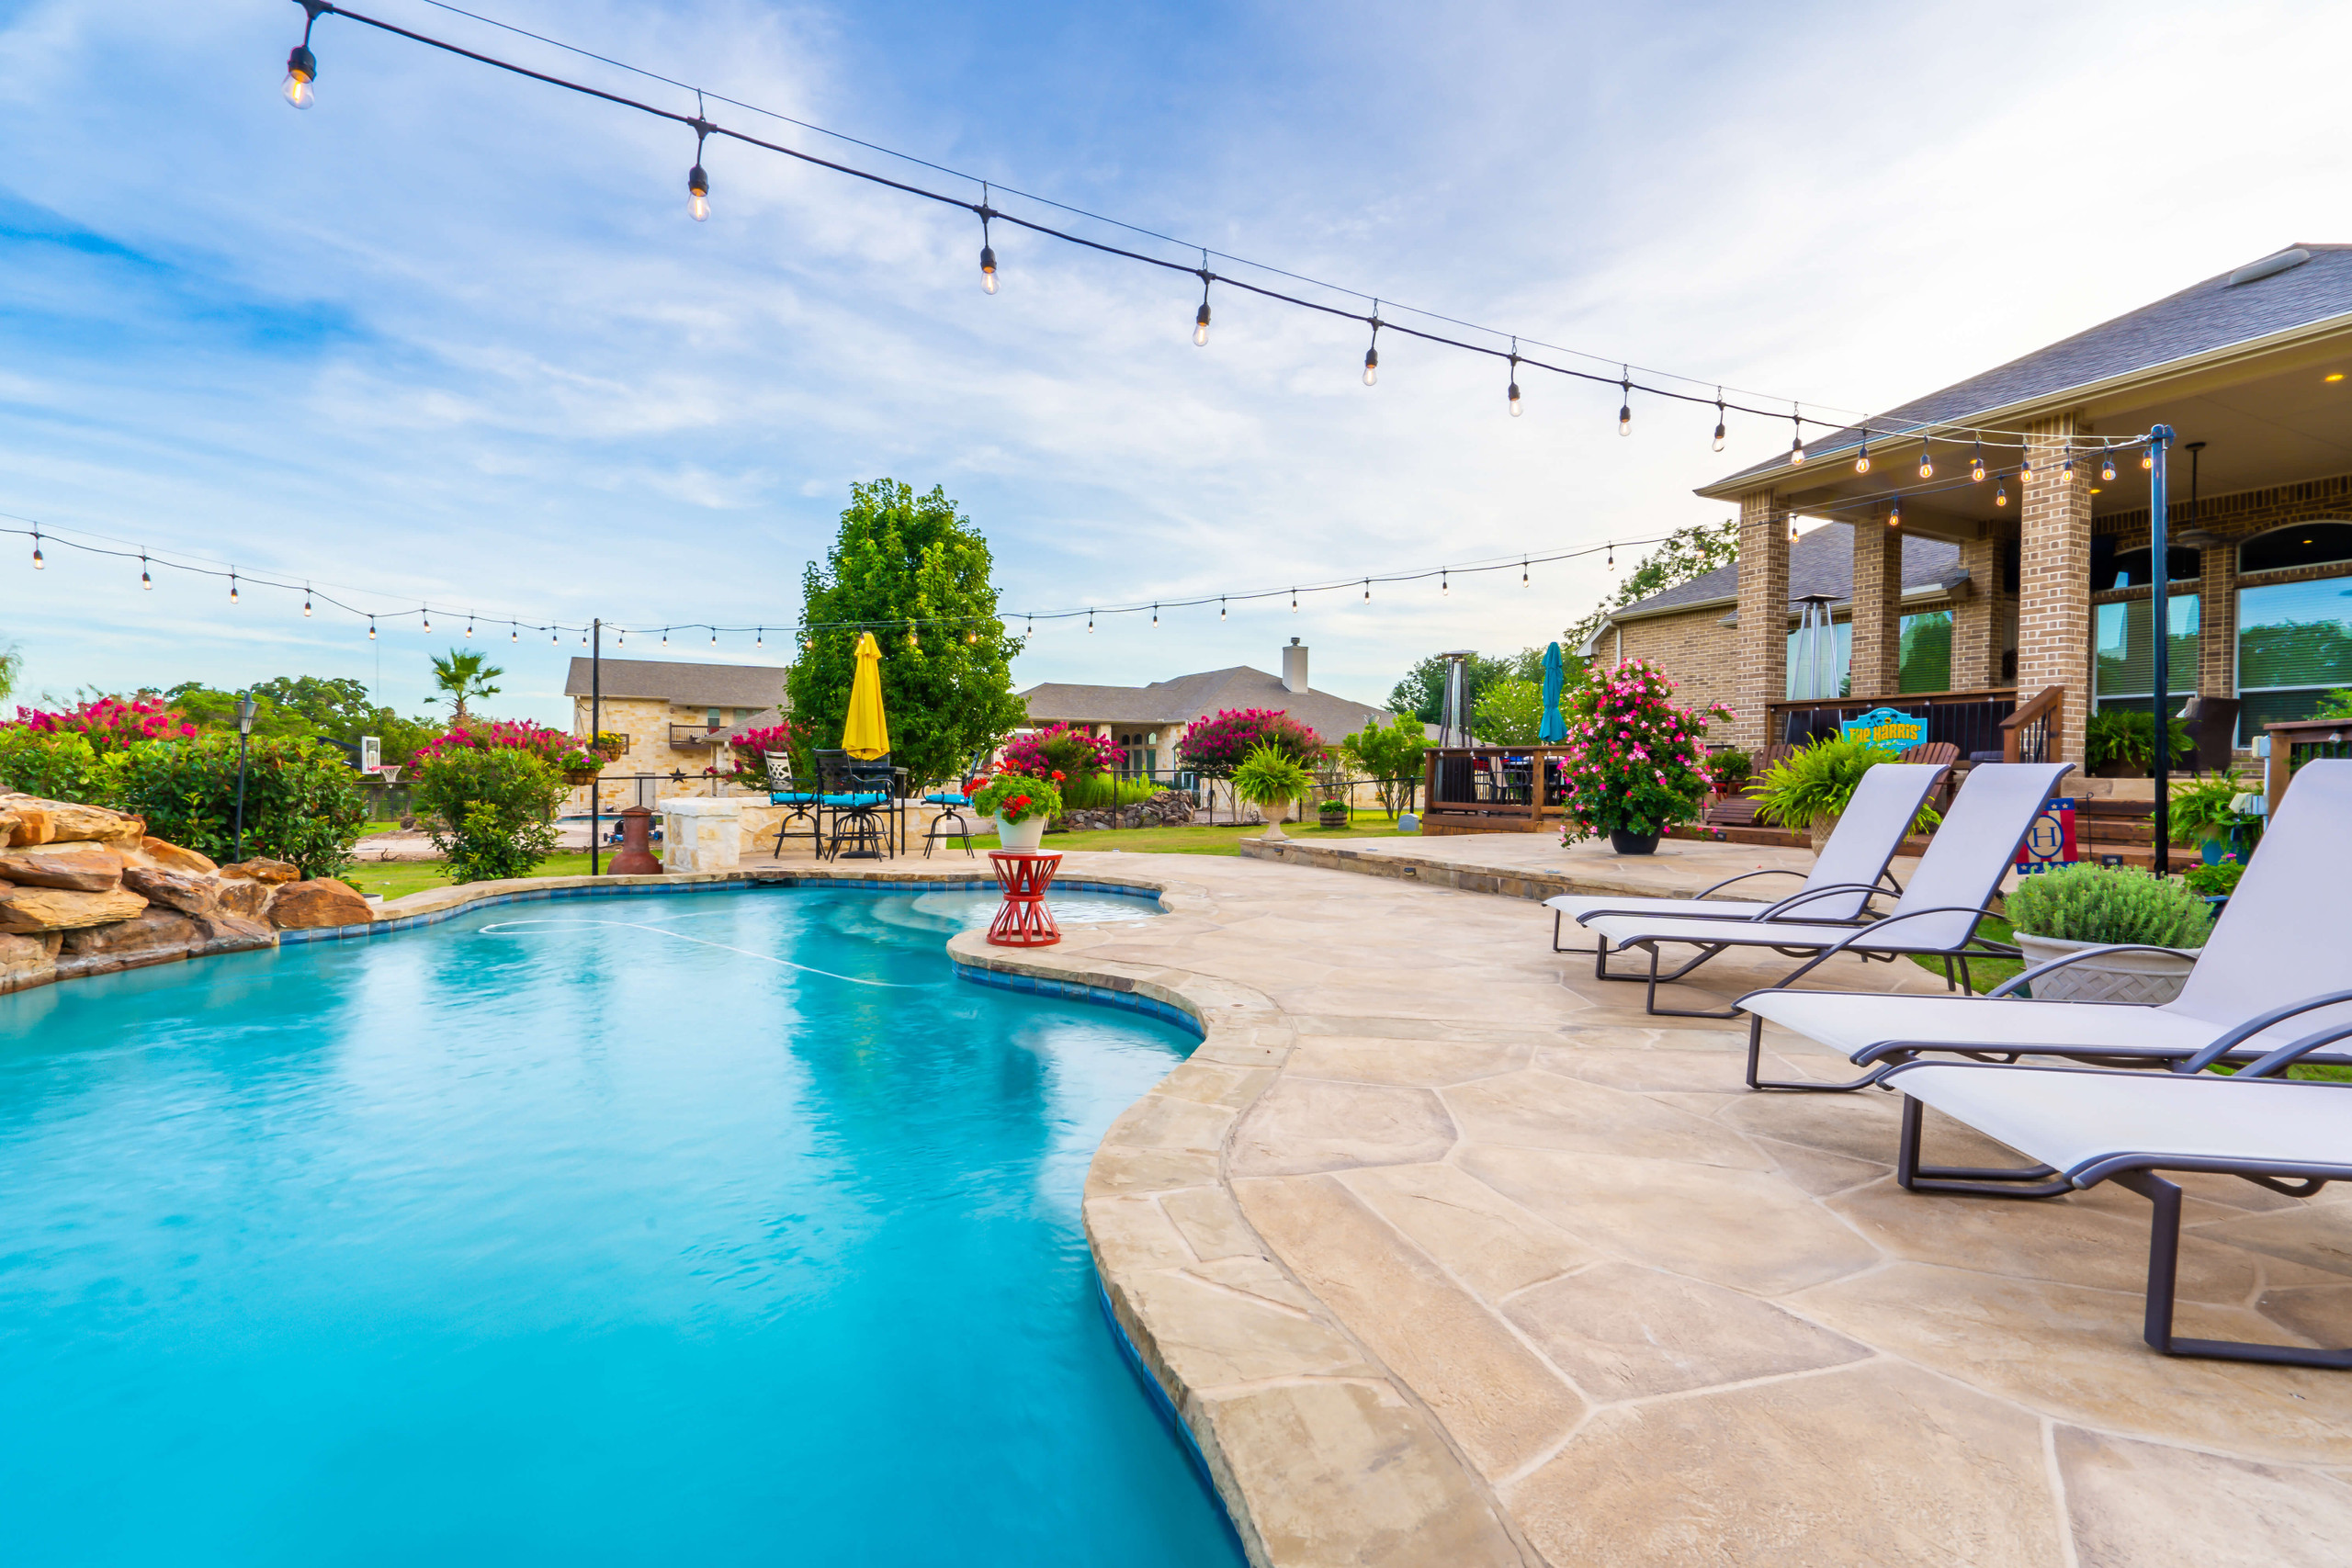 Backyard pool remodel carvestone pool decking in San Antonio Texas